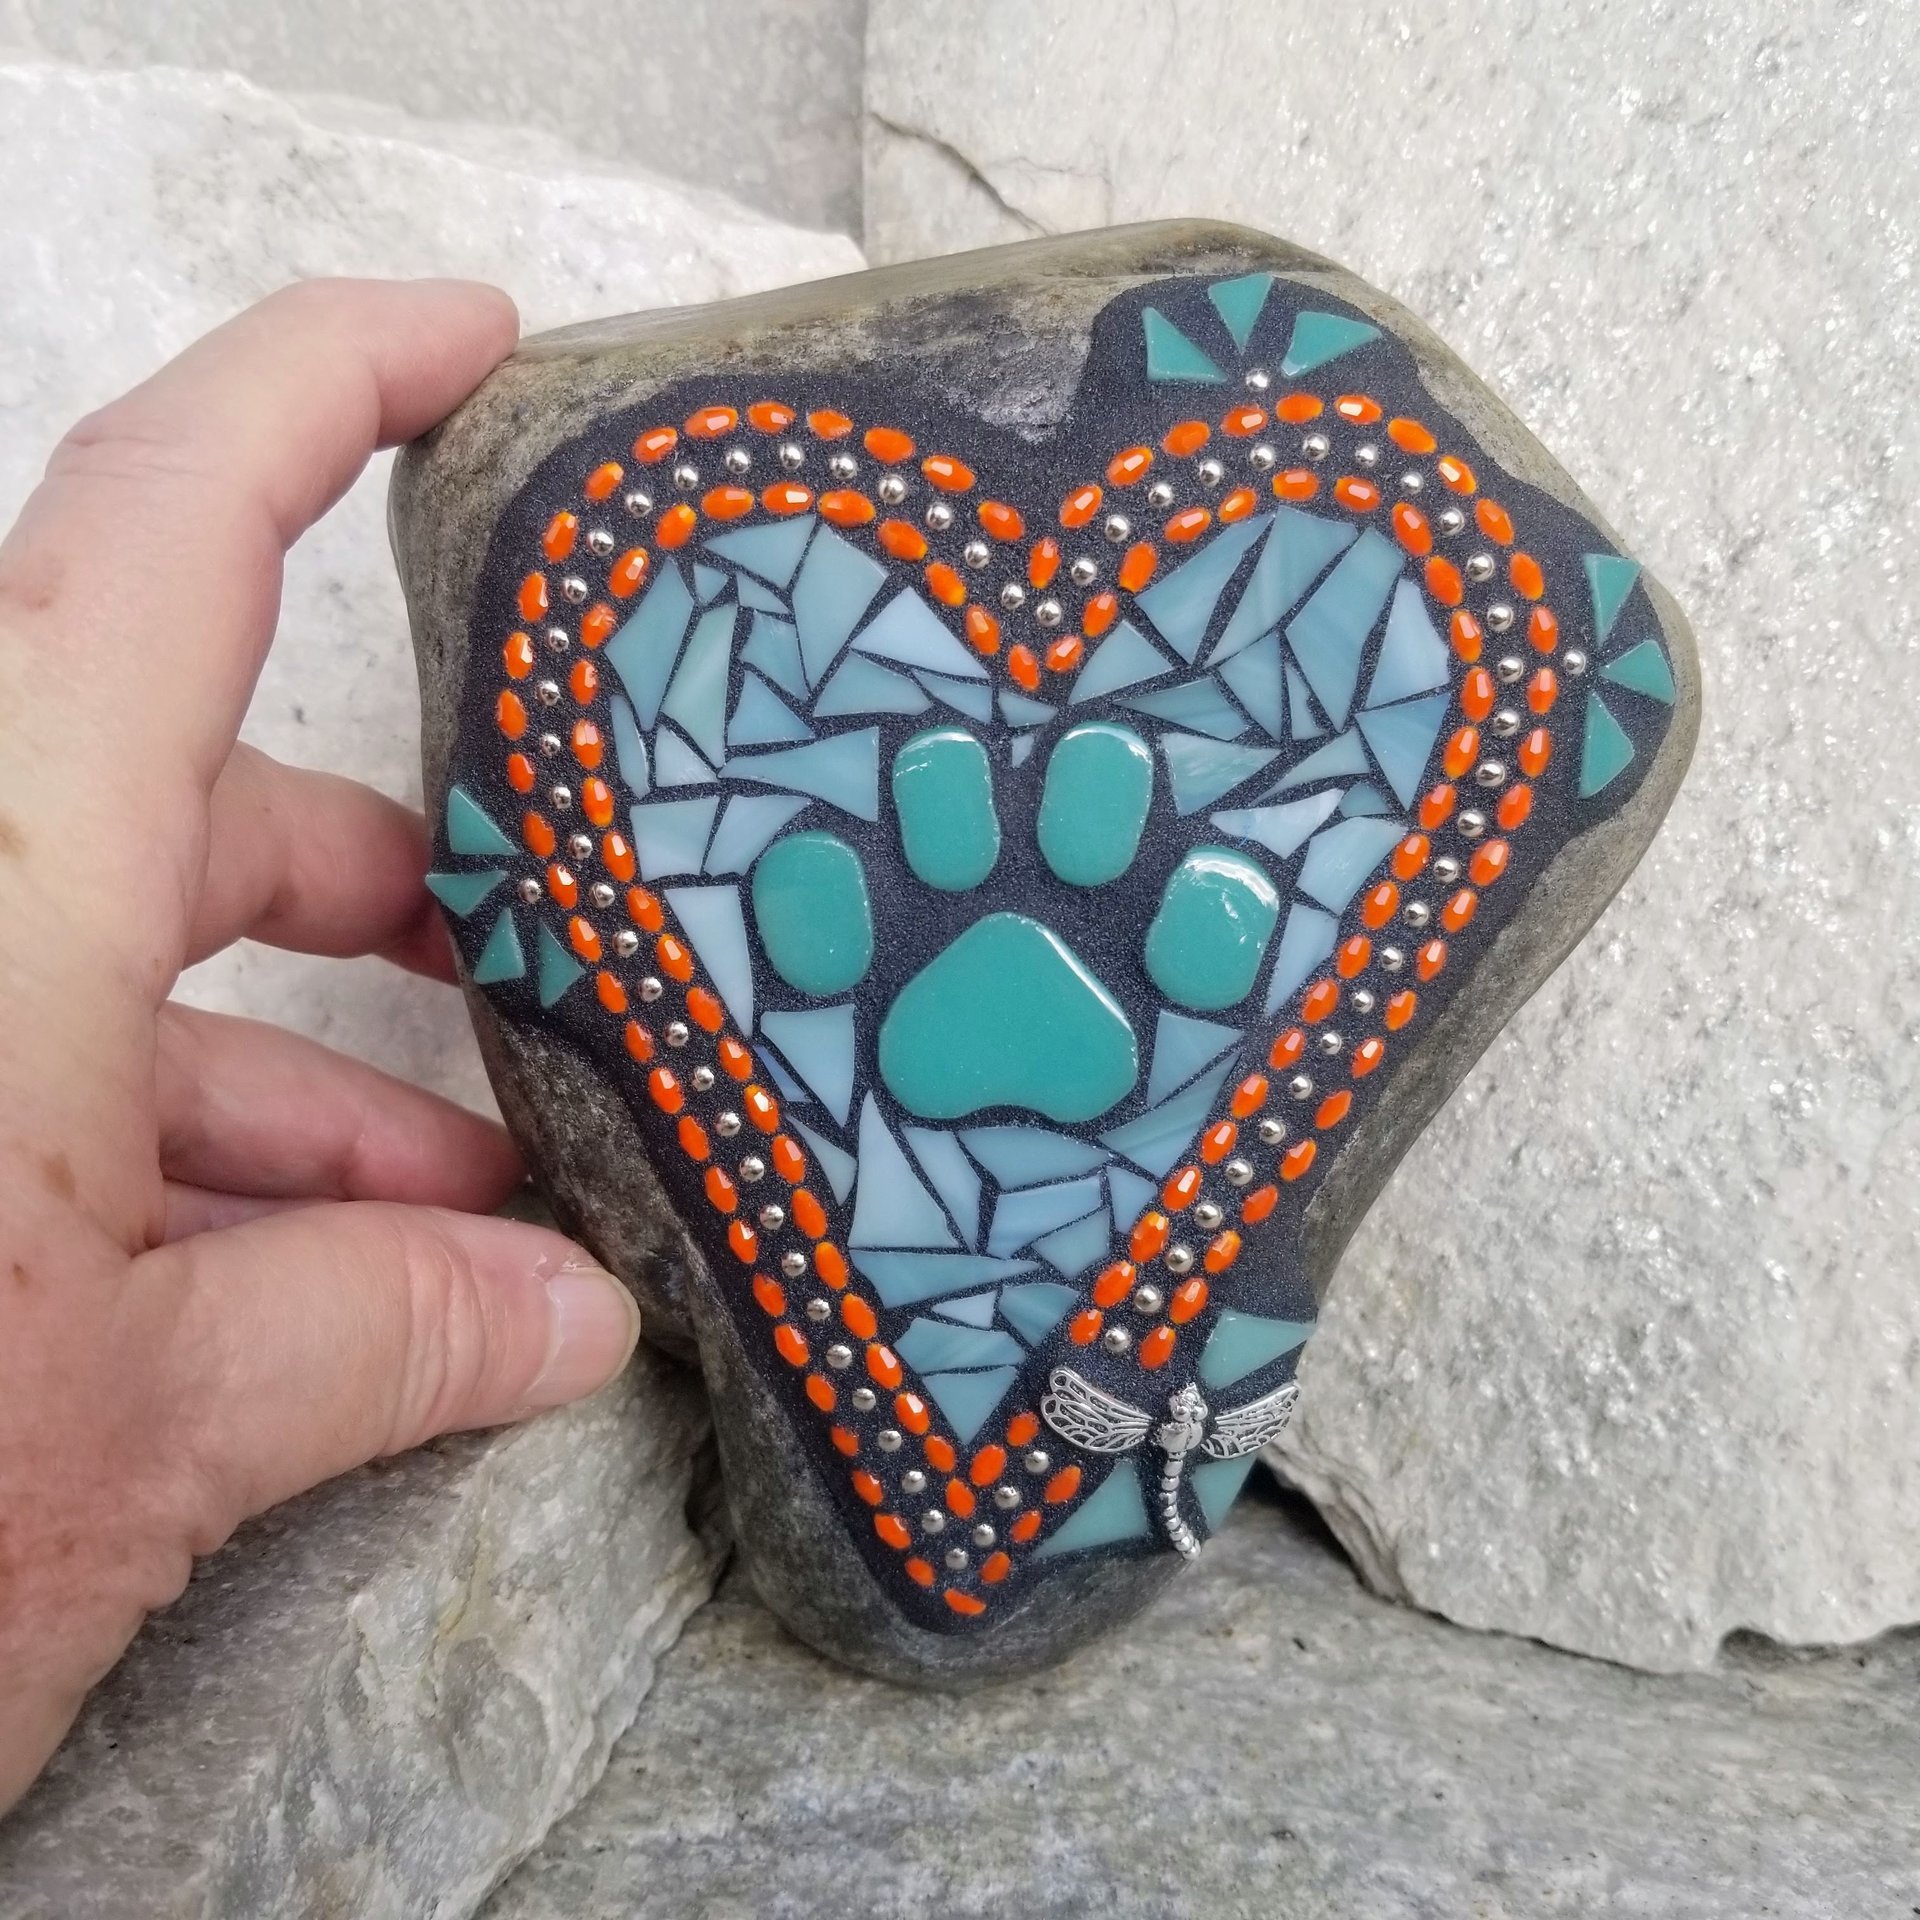 Teal Heart w Teal Paw Print - Garden Stone